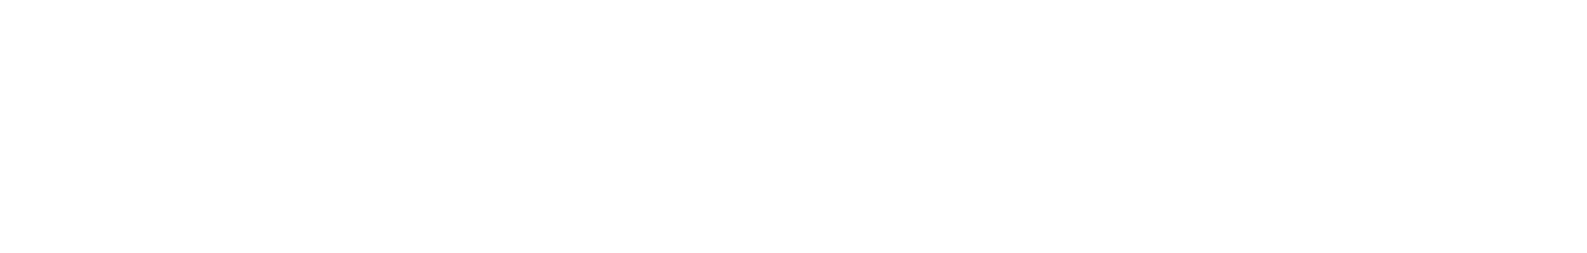 Forrester Research
 logo large for dark backgrounds (transparent PNG)